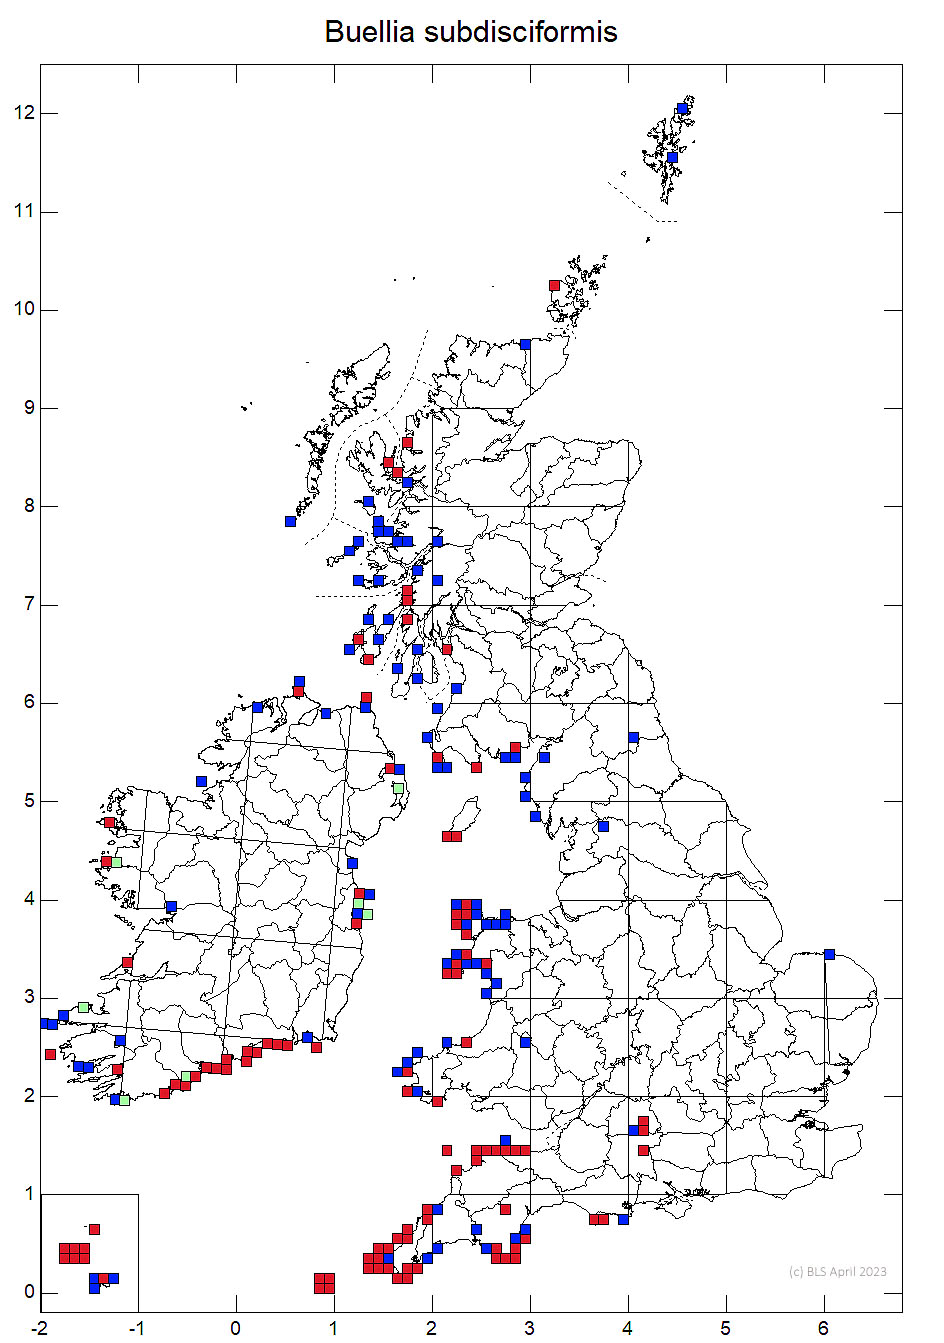 Buellia subdisciformis 10km sq distribution map